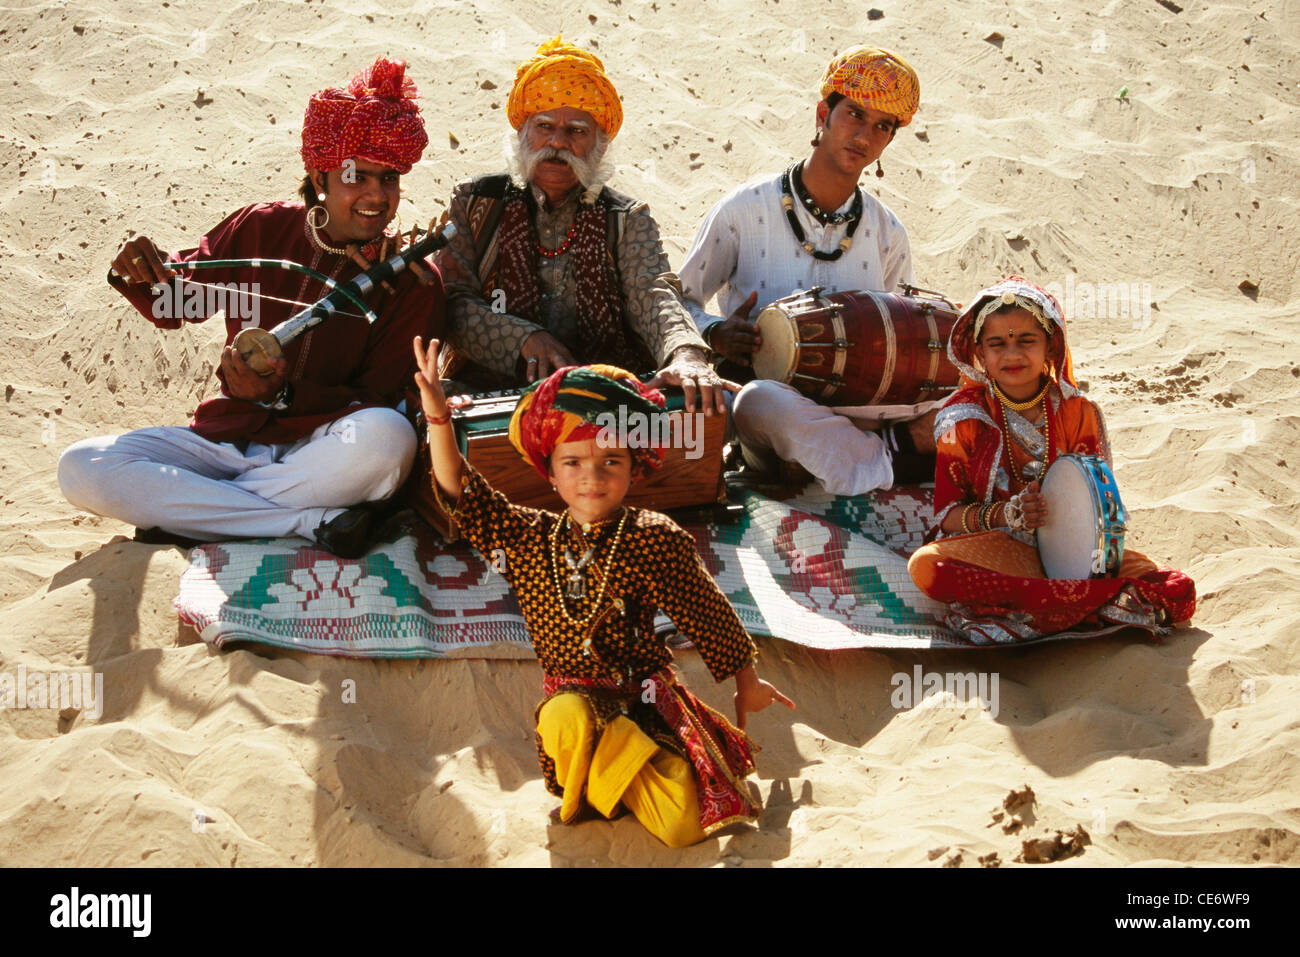 BDR 83397 : rajasthani folk musicians dancing and playing harmonium violin drums rajasthan india MR#657A Stock Photo